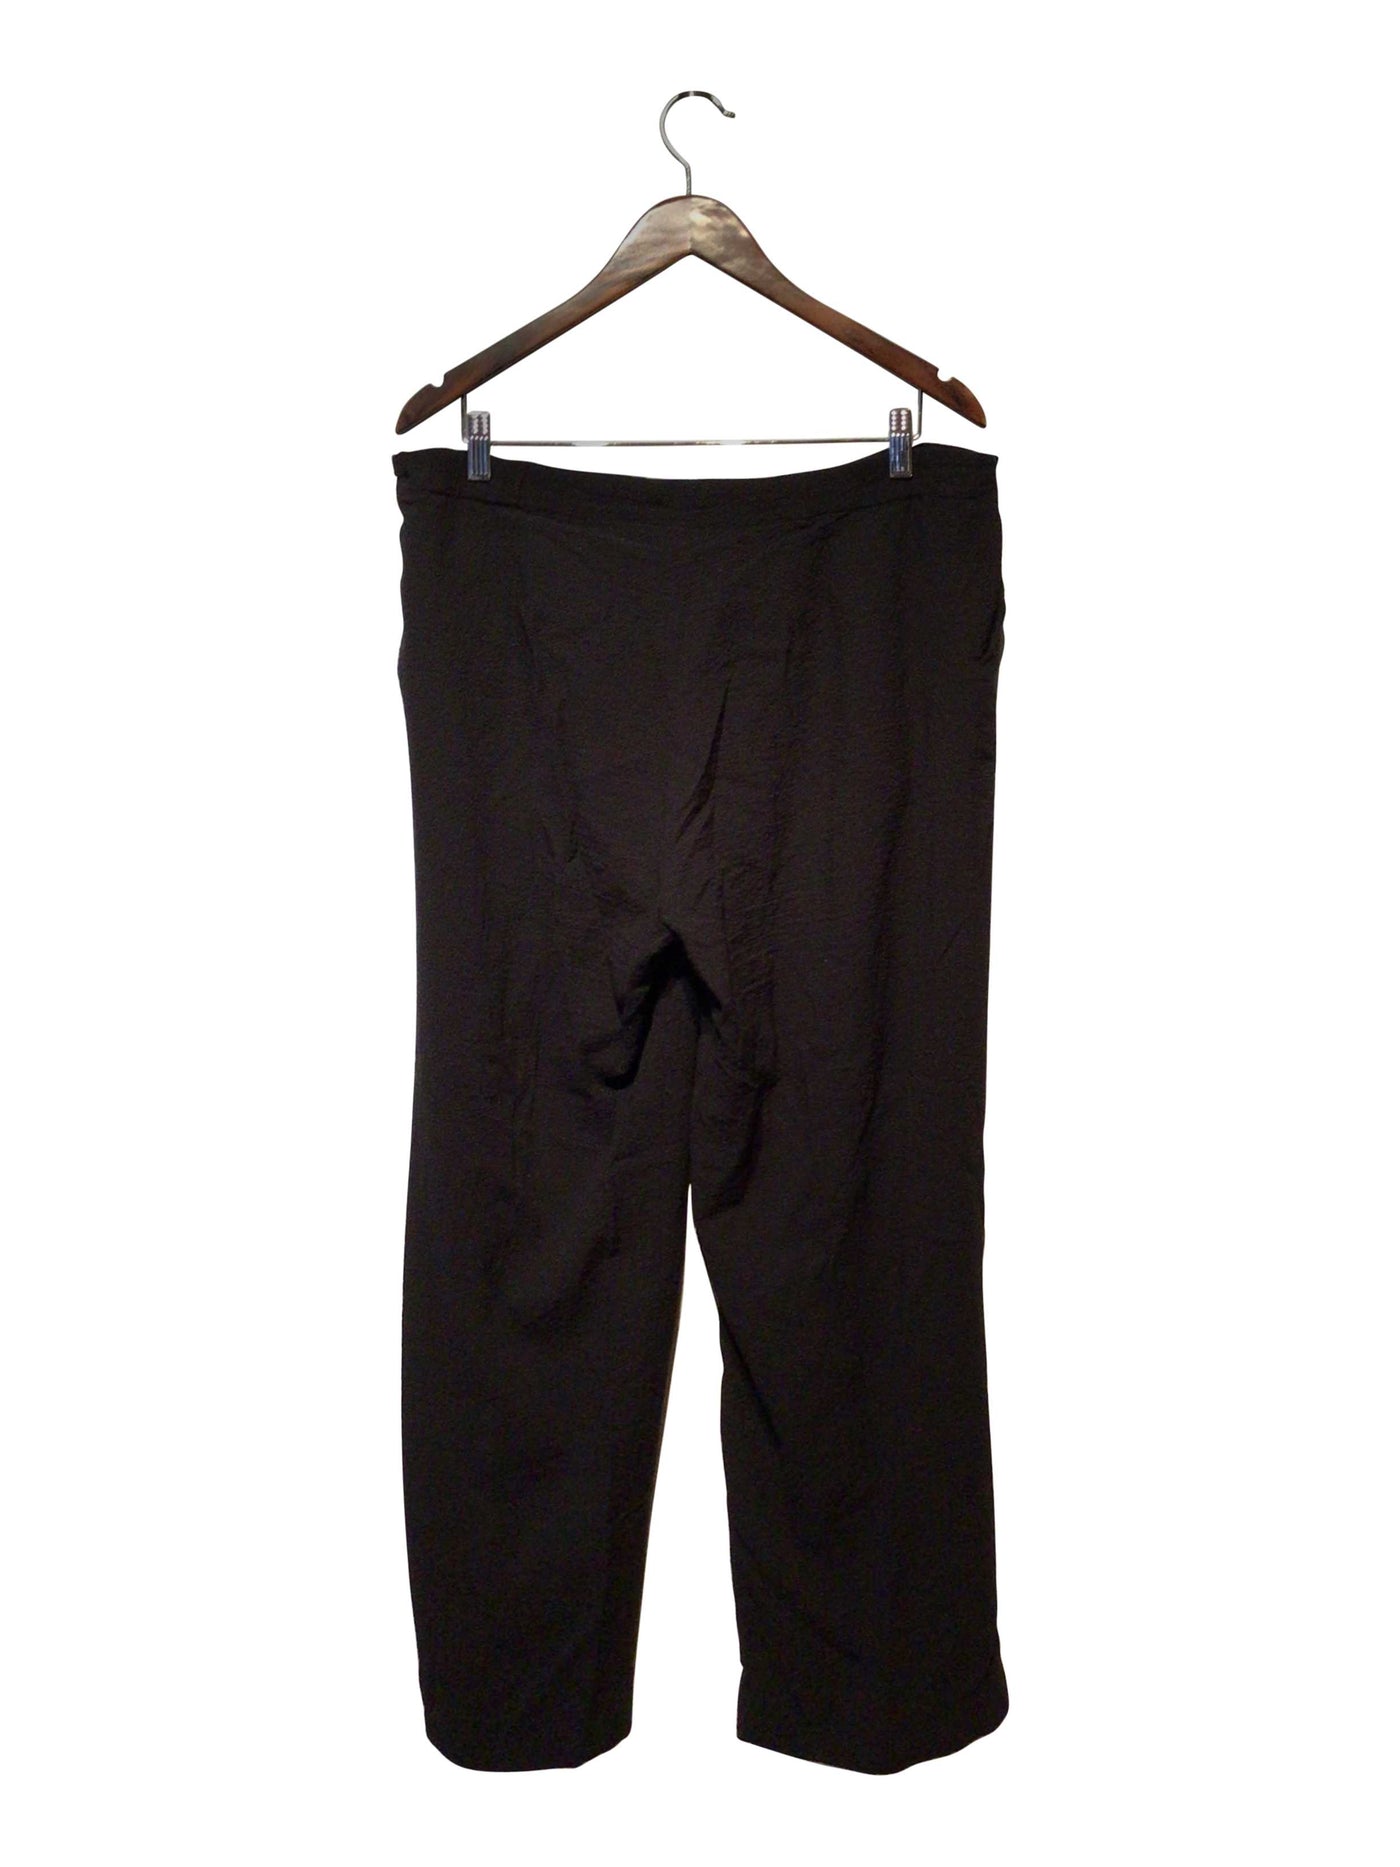 EX OFFICIO Regular fit Pant in Black  -  L  21.50 Koop